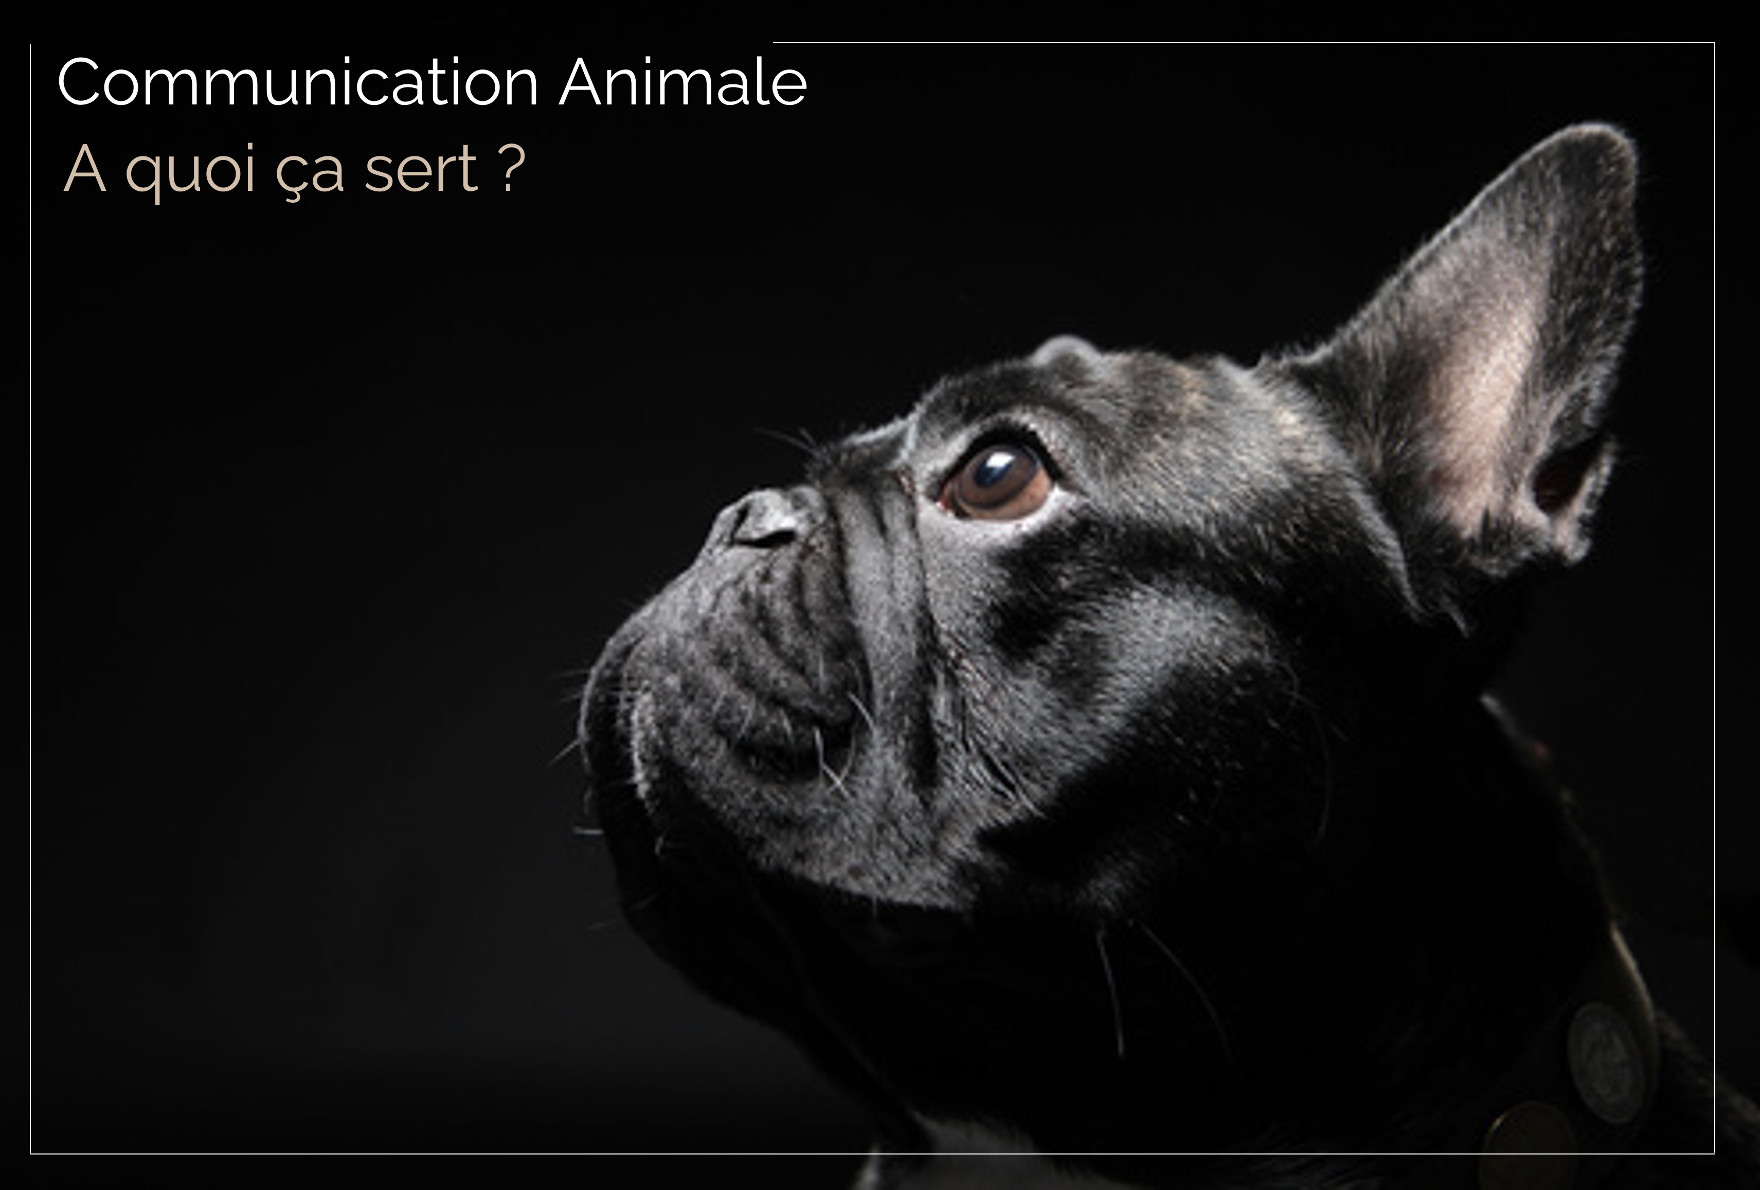 A quoi sert la Communication animale